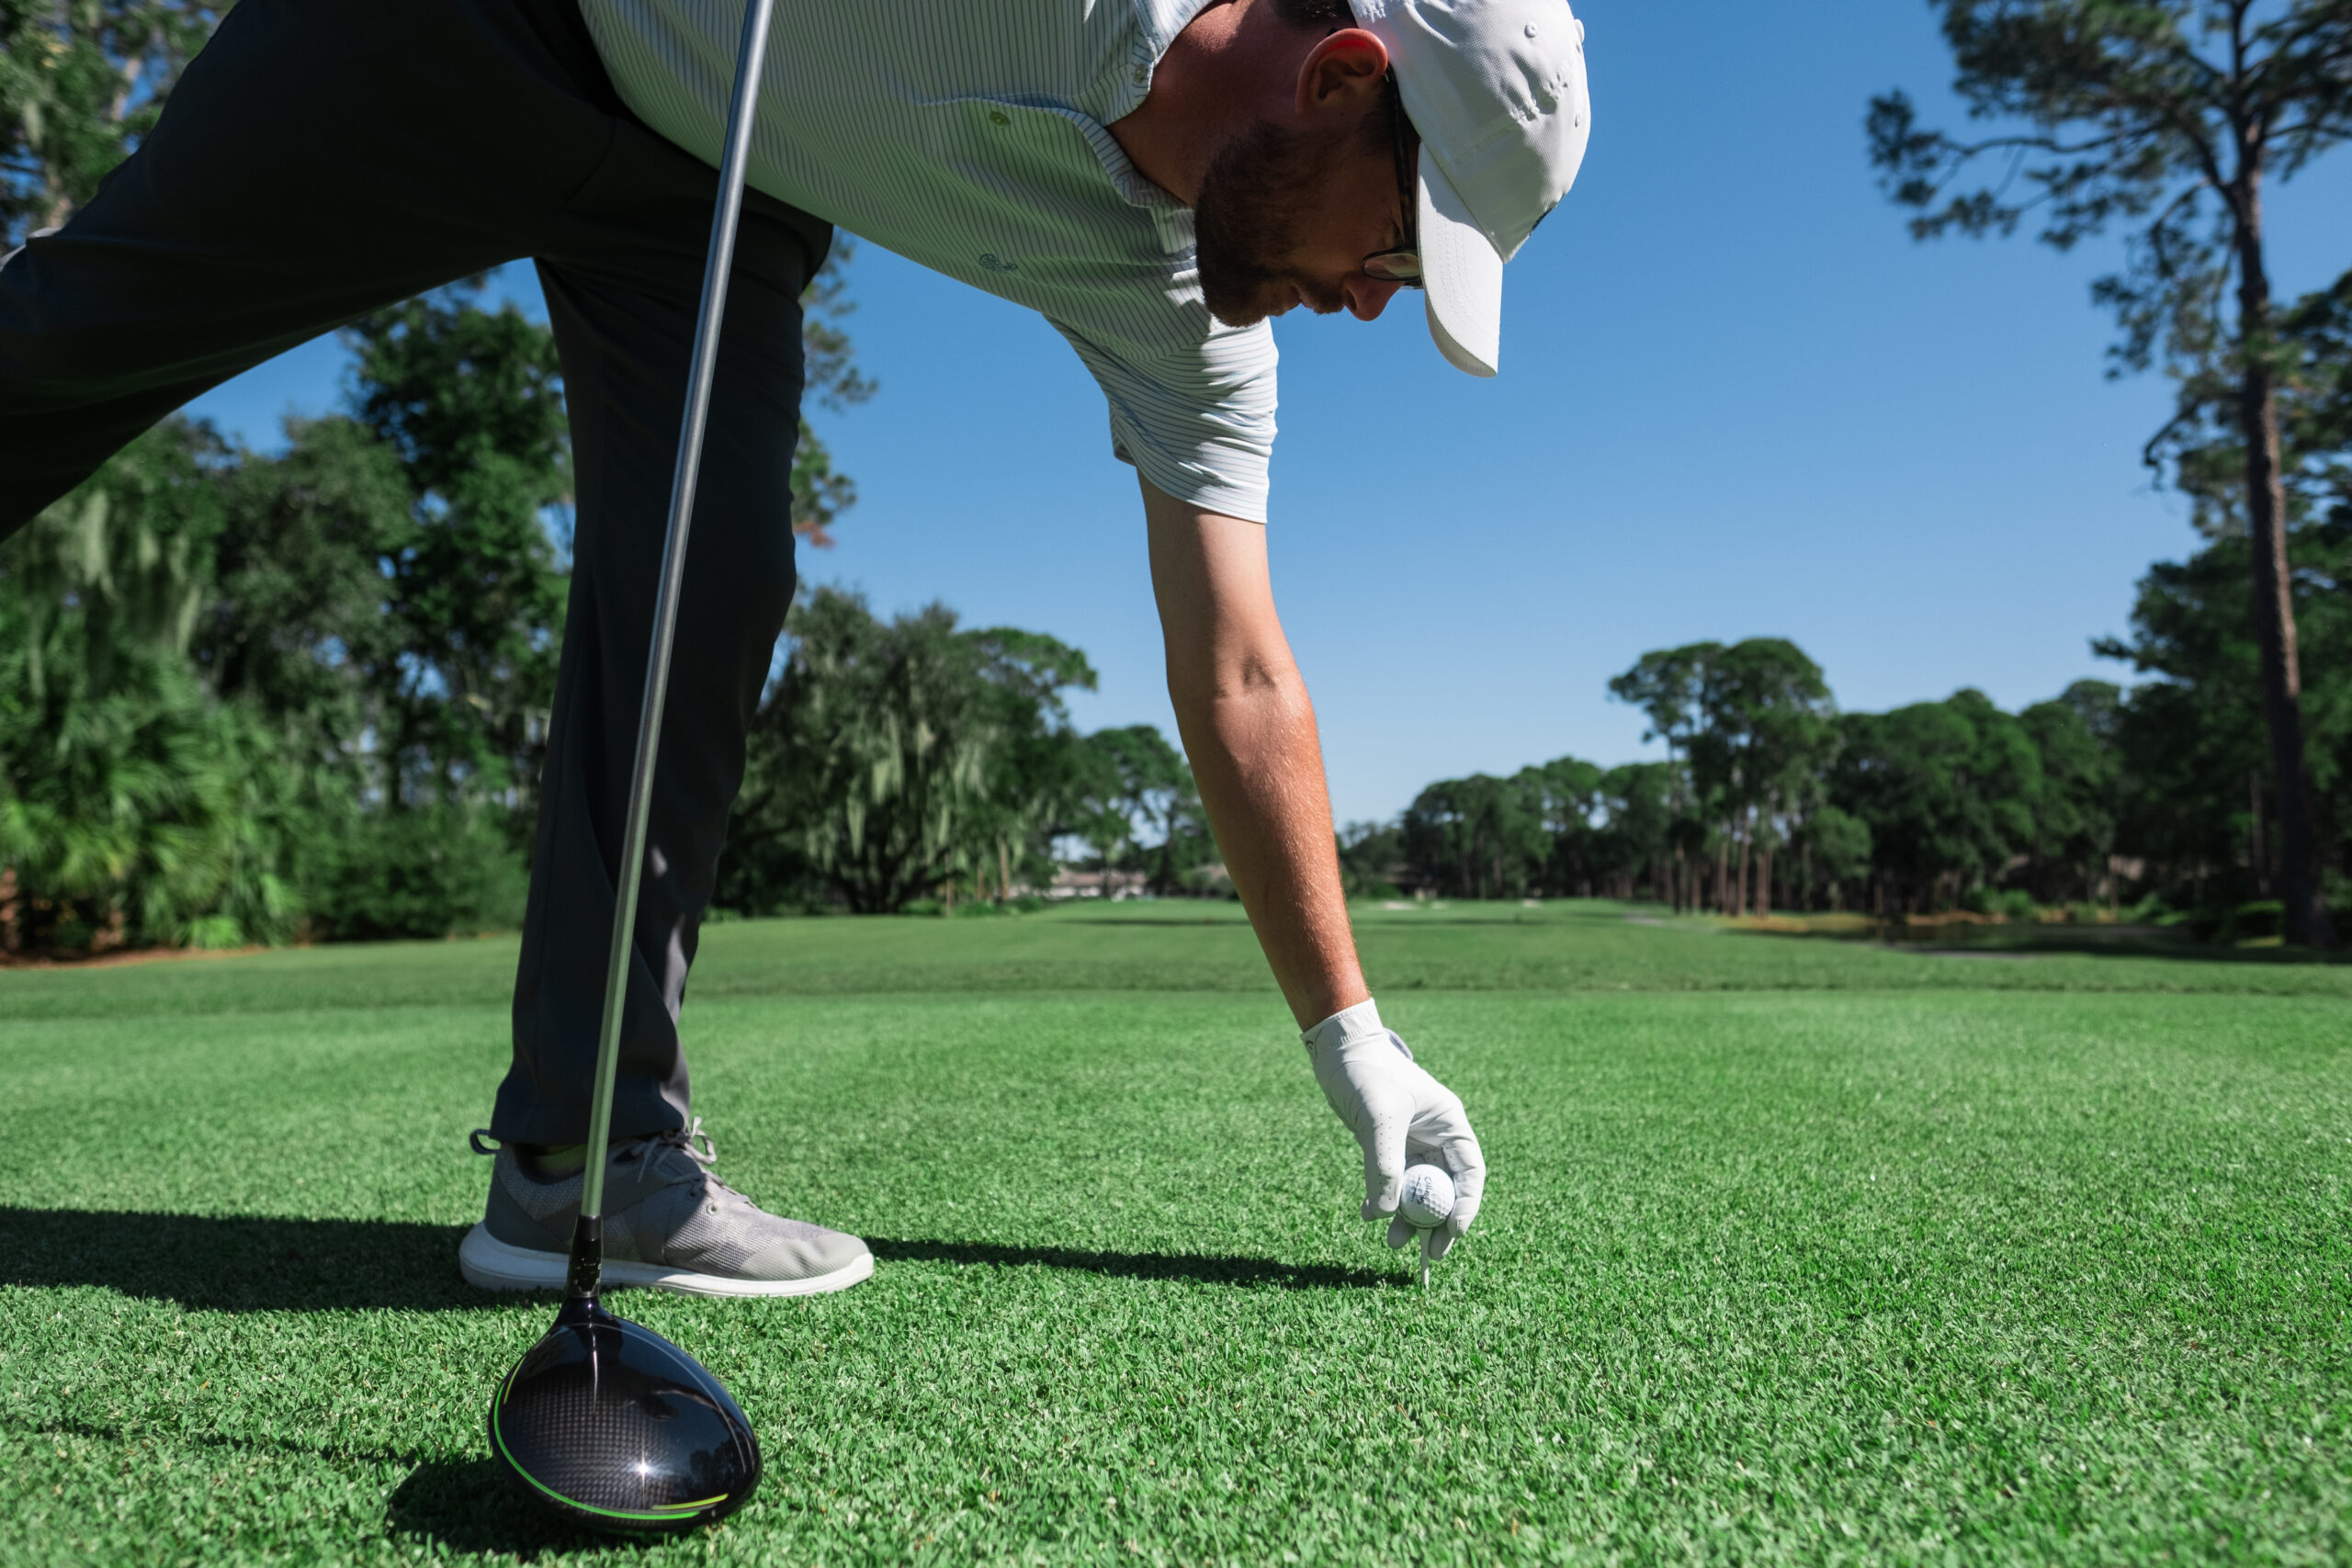 Golf, Latest News, Courses, Technology